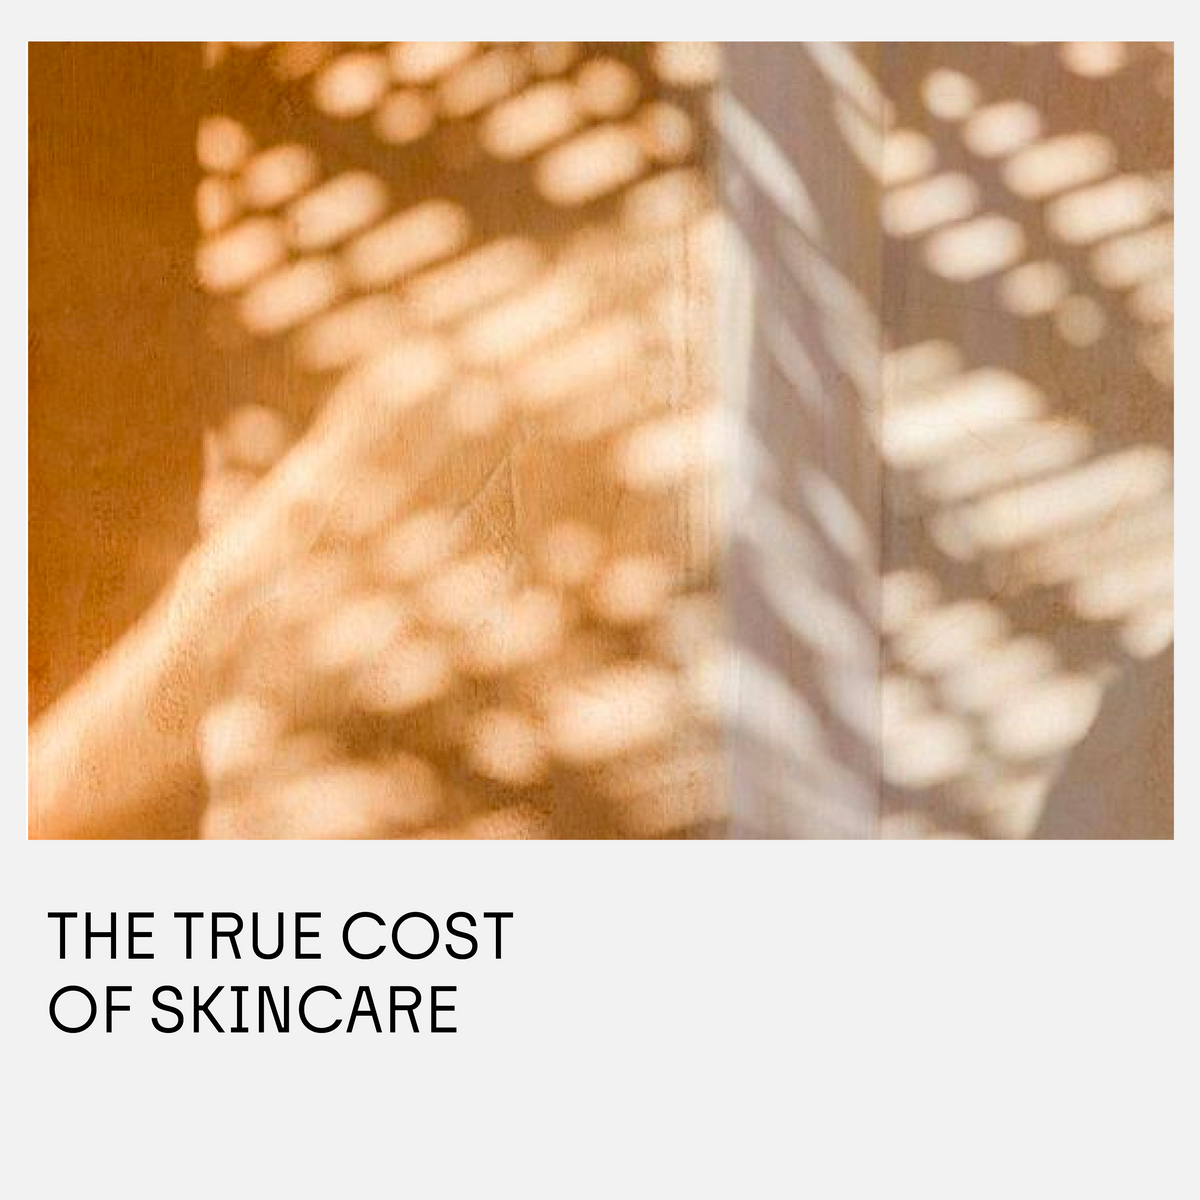 The True Cost of Skincare